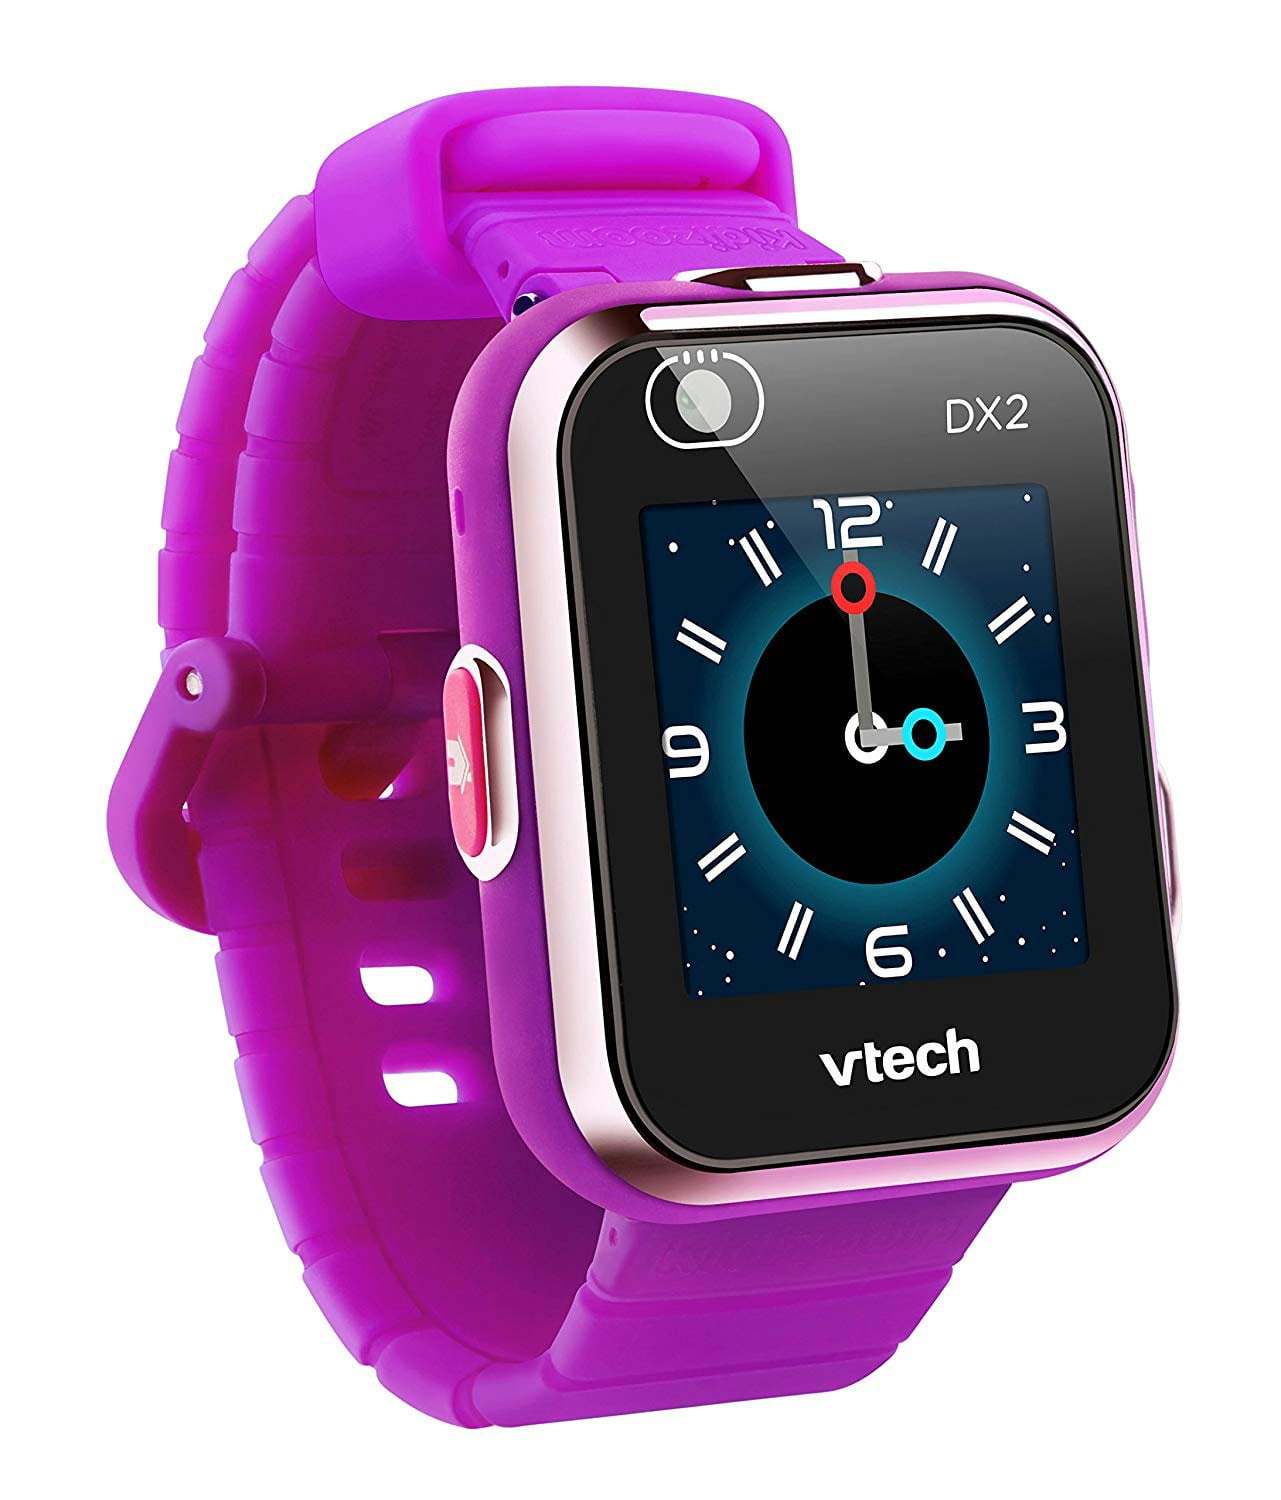 Vtech Kidizoom Smartwatch Dx2 Purple Dual Cameras Video Smart Watch